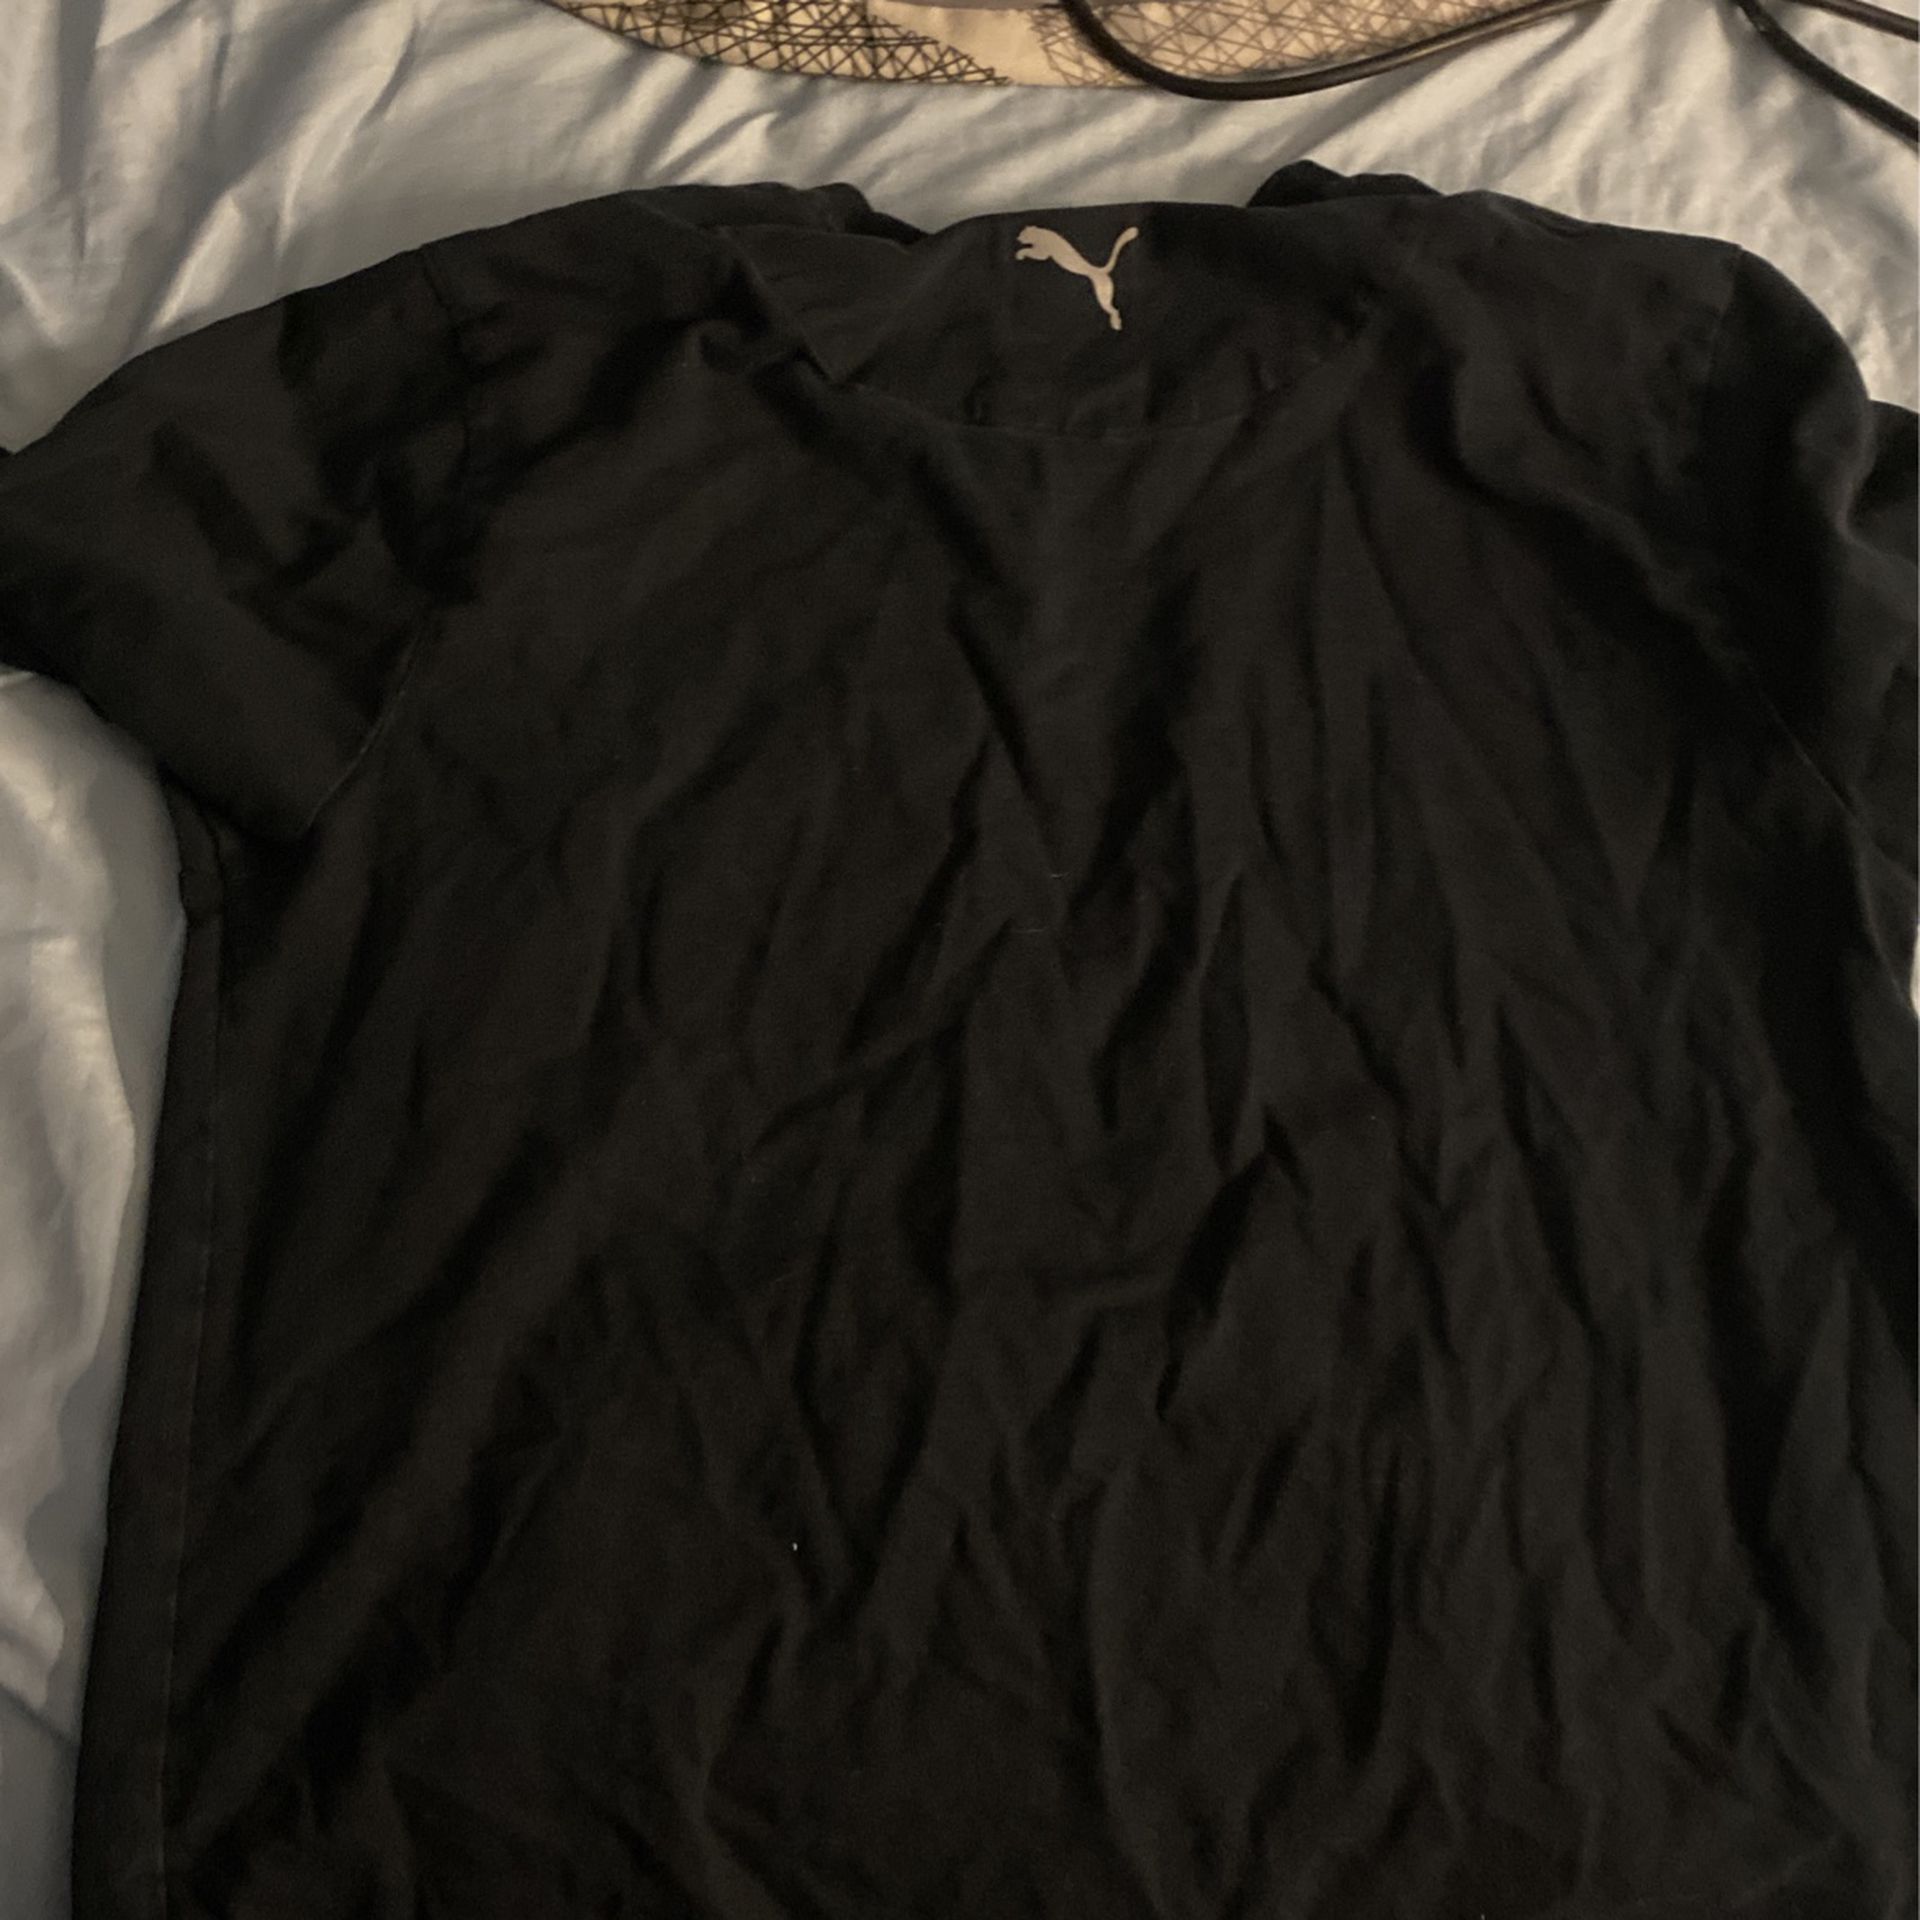 Puma X Bape Collab Shirt